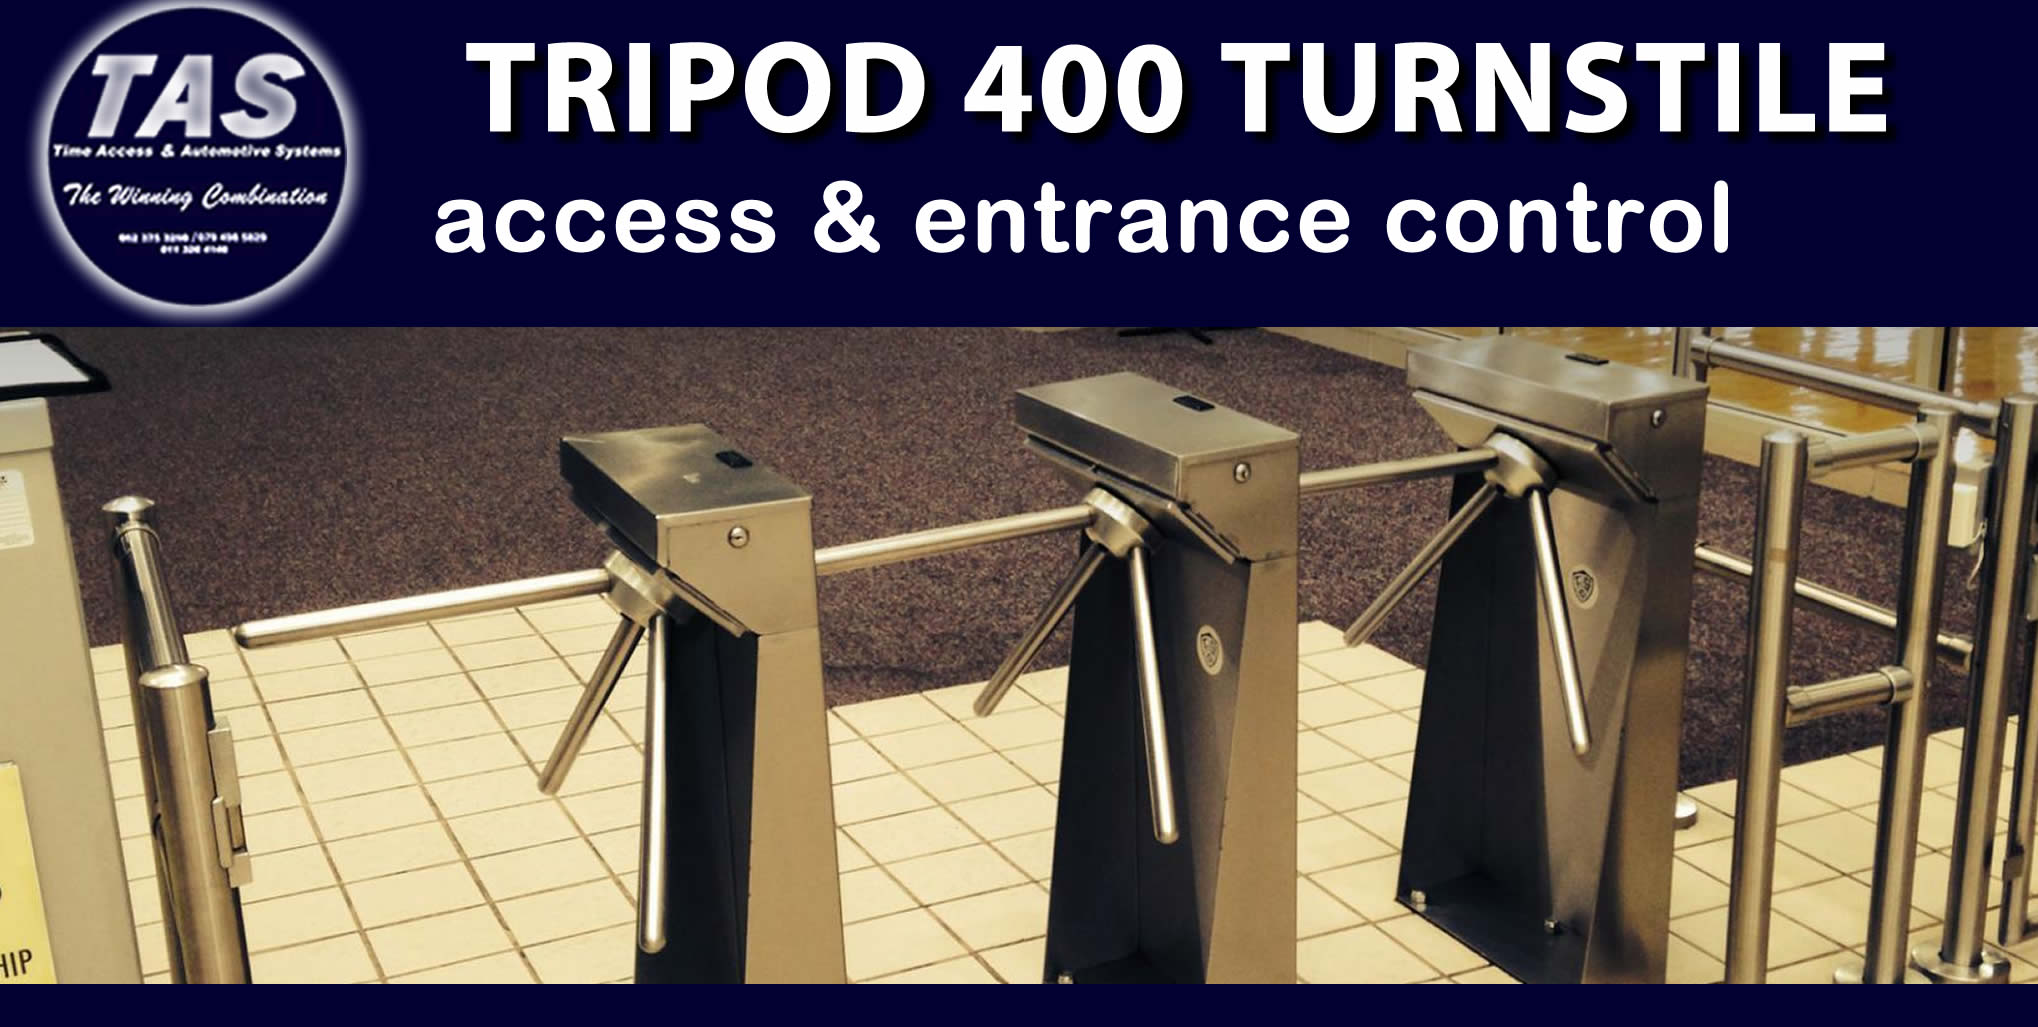 turnstiles tripod 400